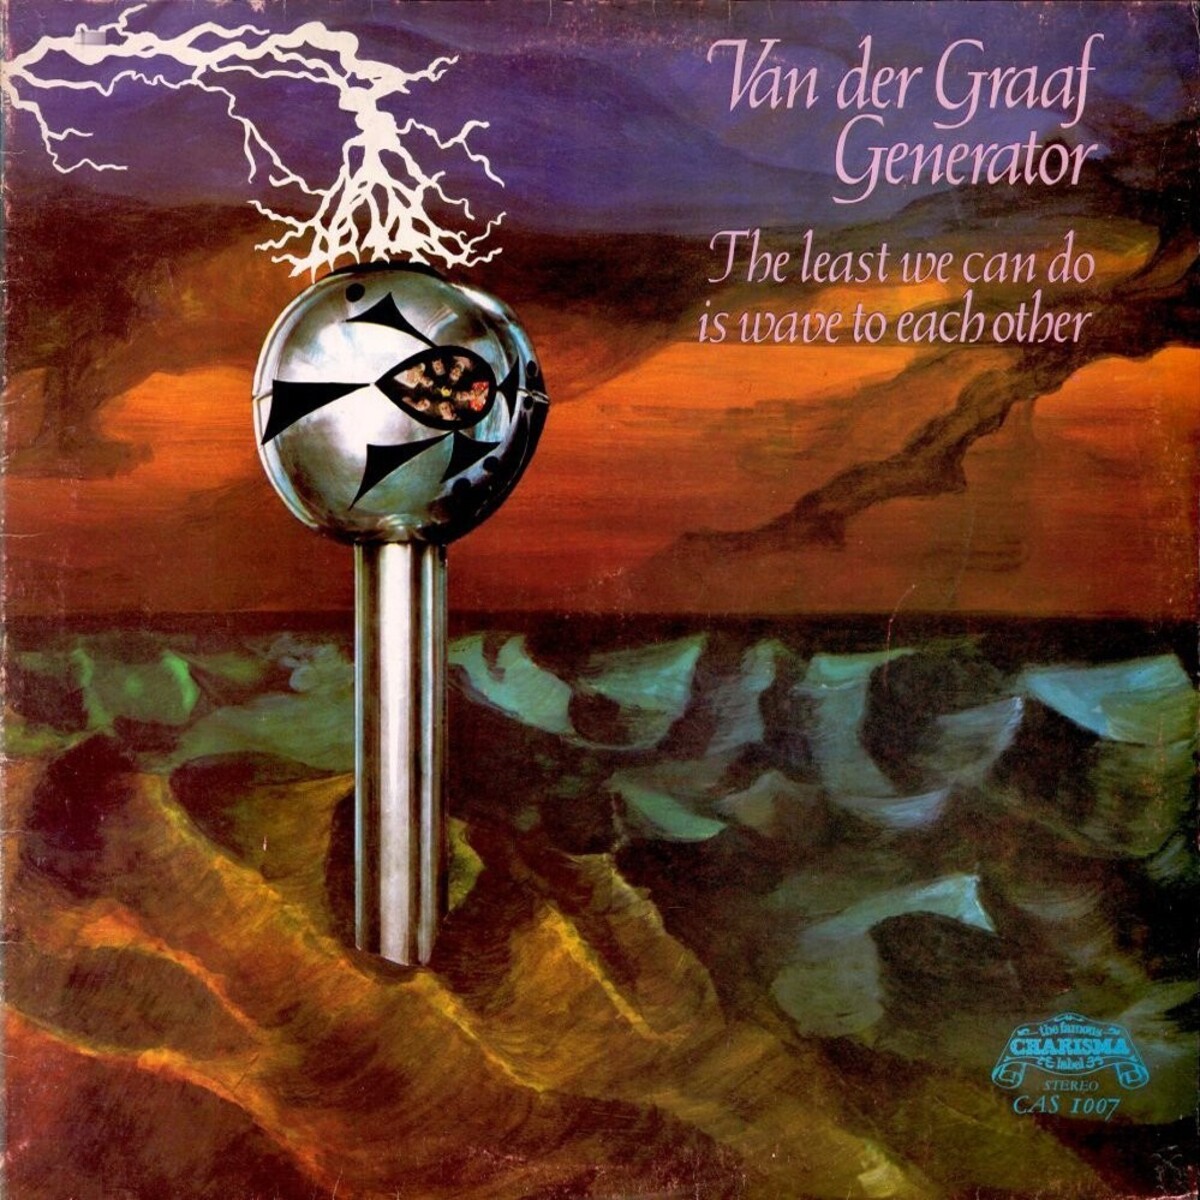 Van-der-graaf-generator-album-cover-least